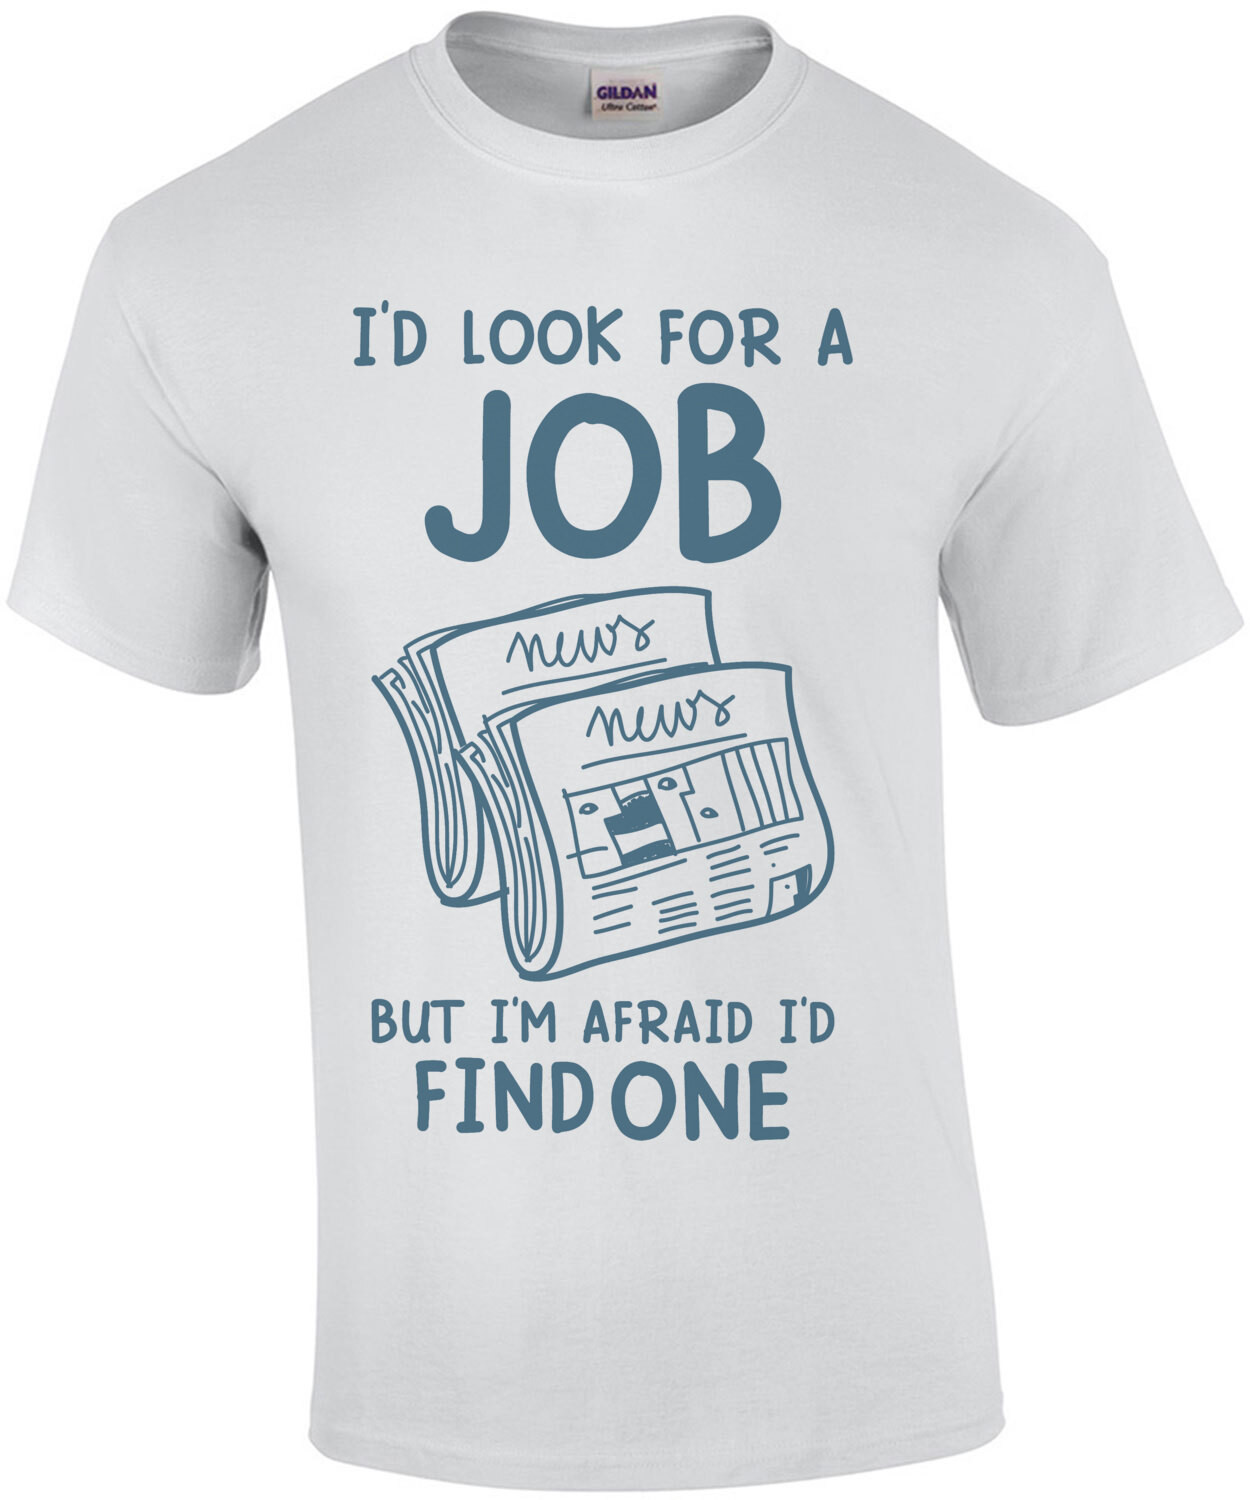 I'd look for a job but I'm afraid I'd fine one. Sarcastic office humor t-shirt